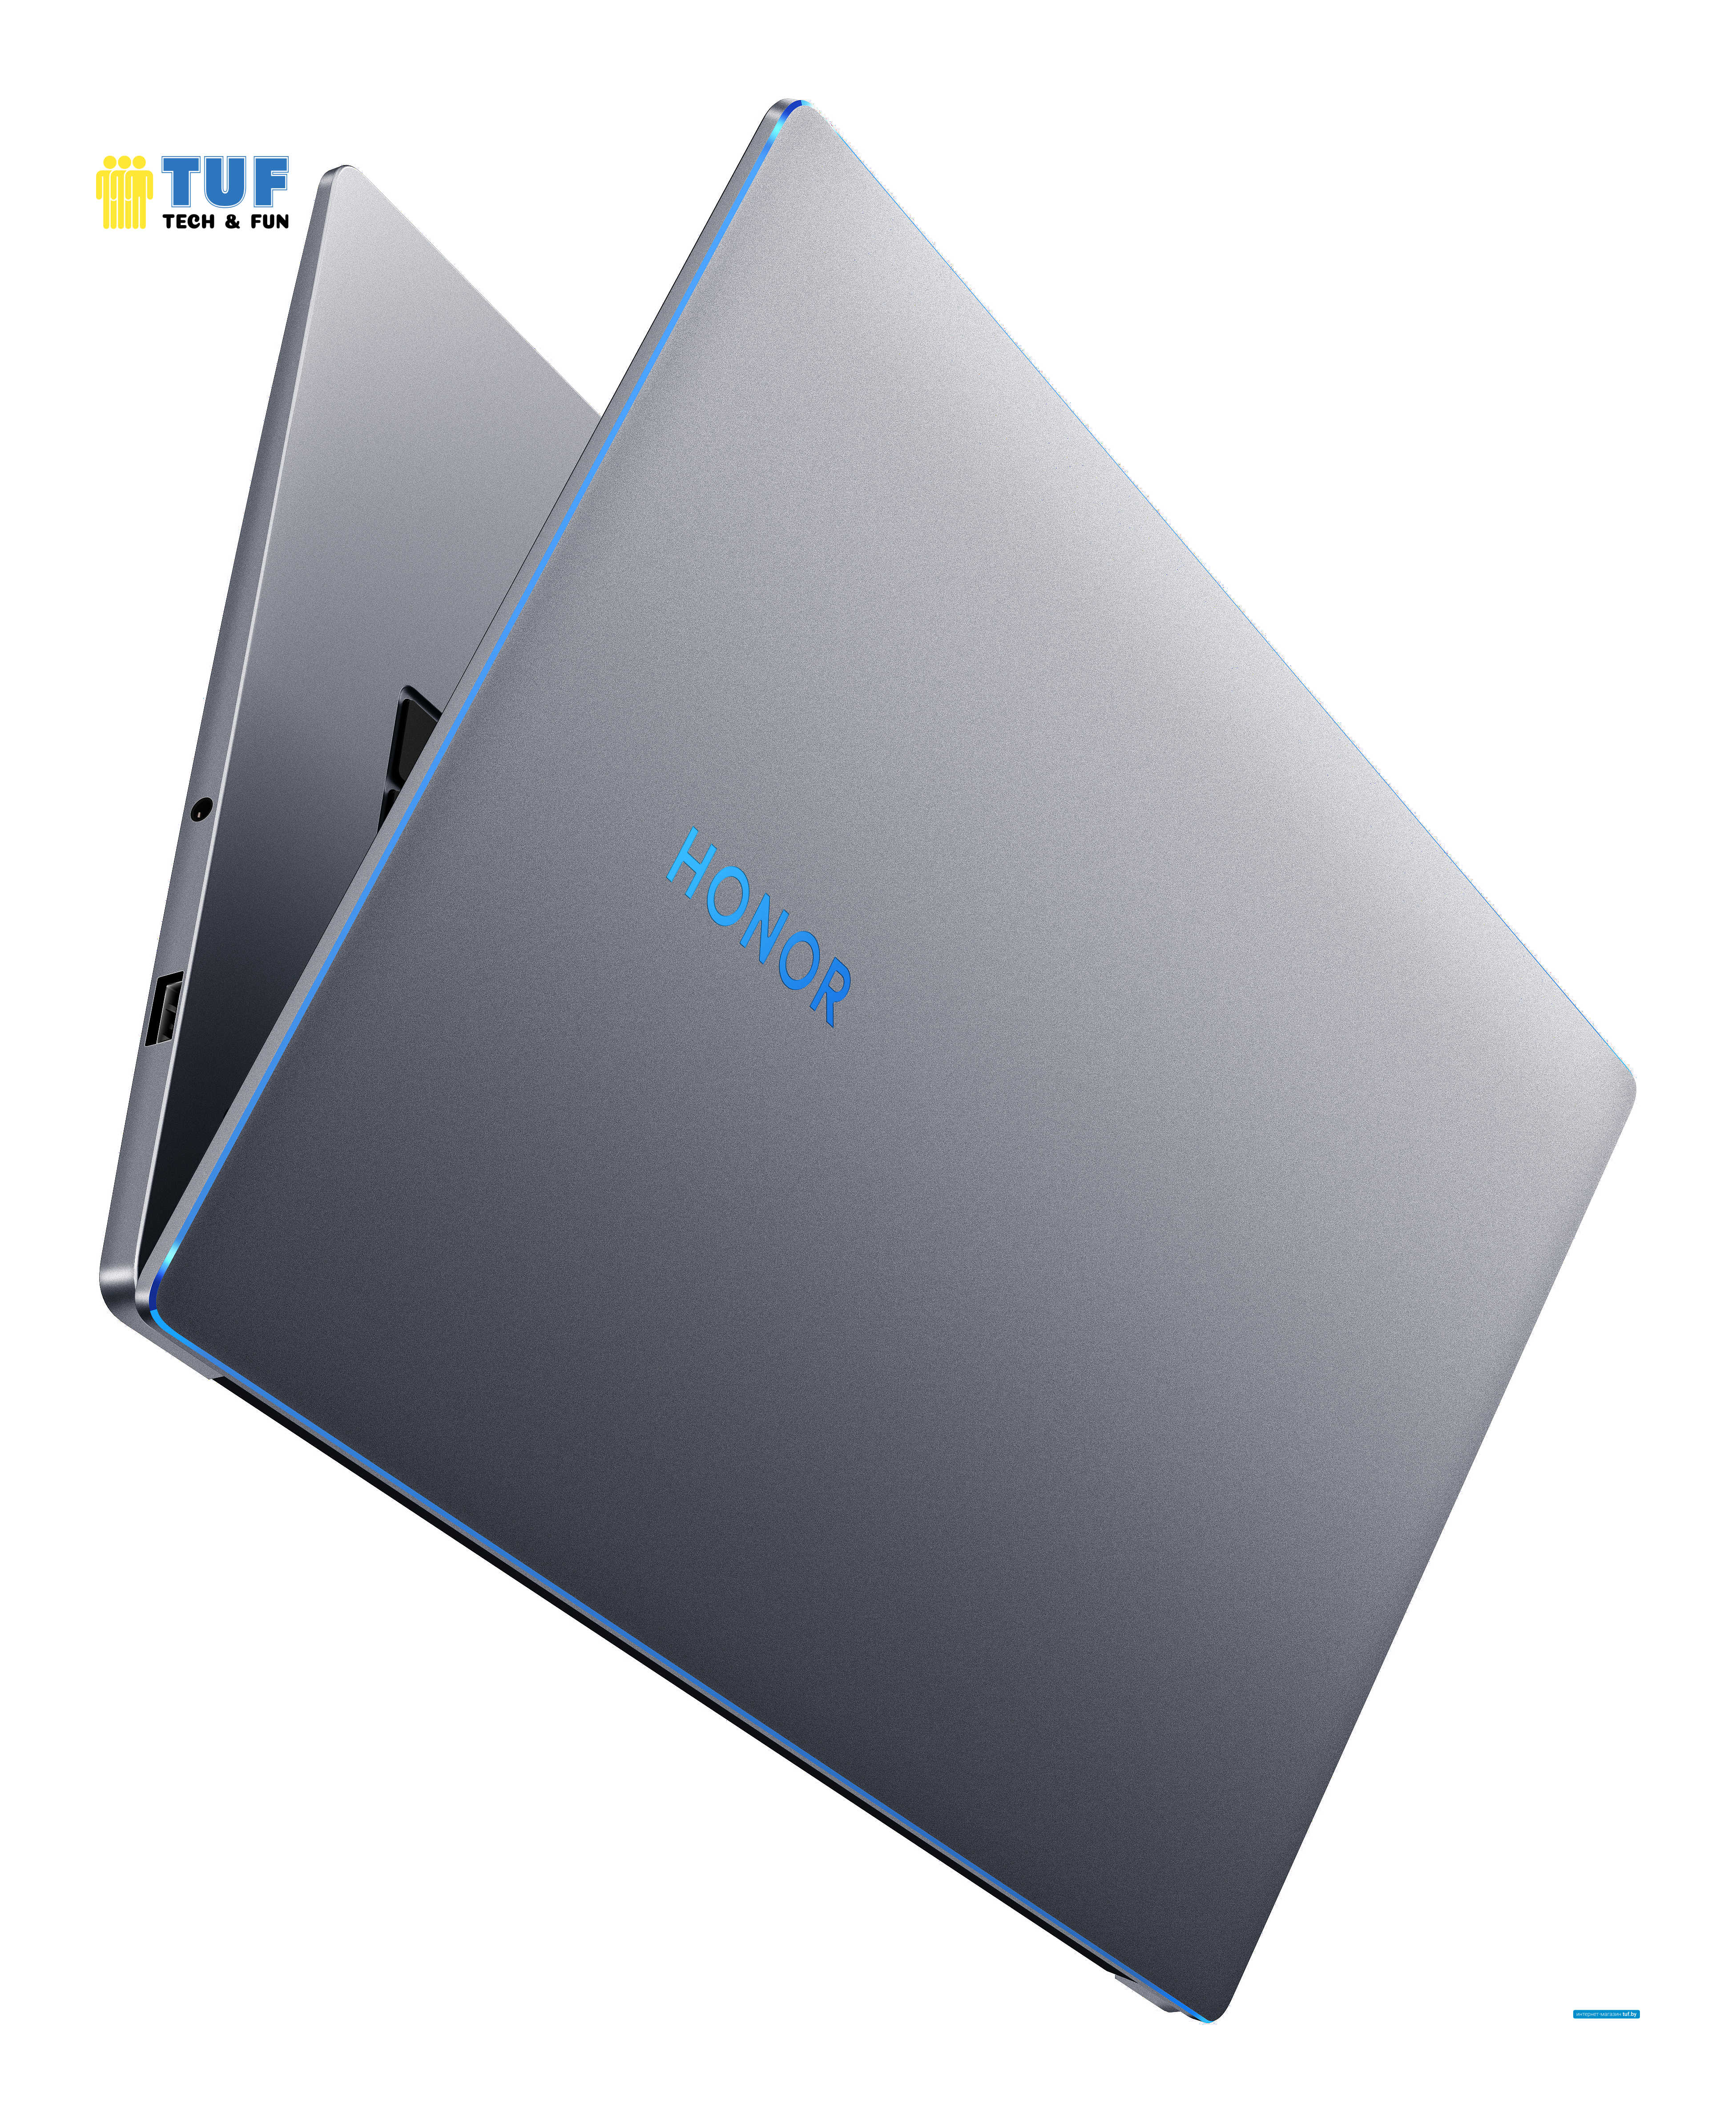 Ноутбук HONOR MagicBook 14 AMD 2021 NMH-WDQ9HN